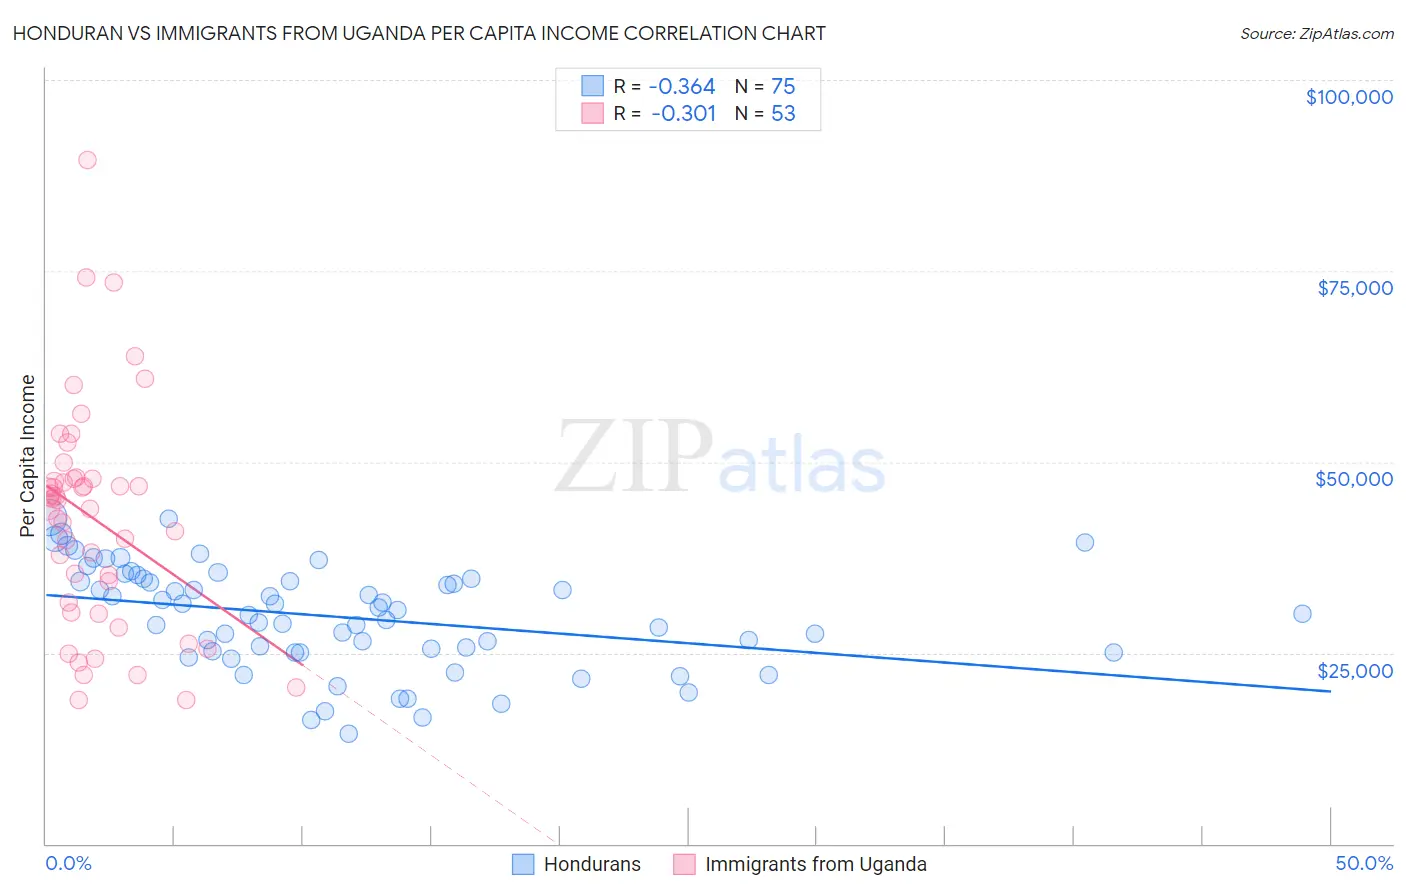 Honduran vs Immigrants from Uganda Per Capita Income